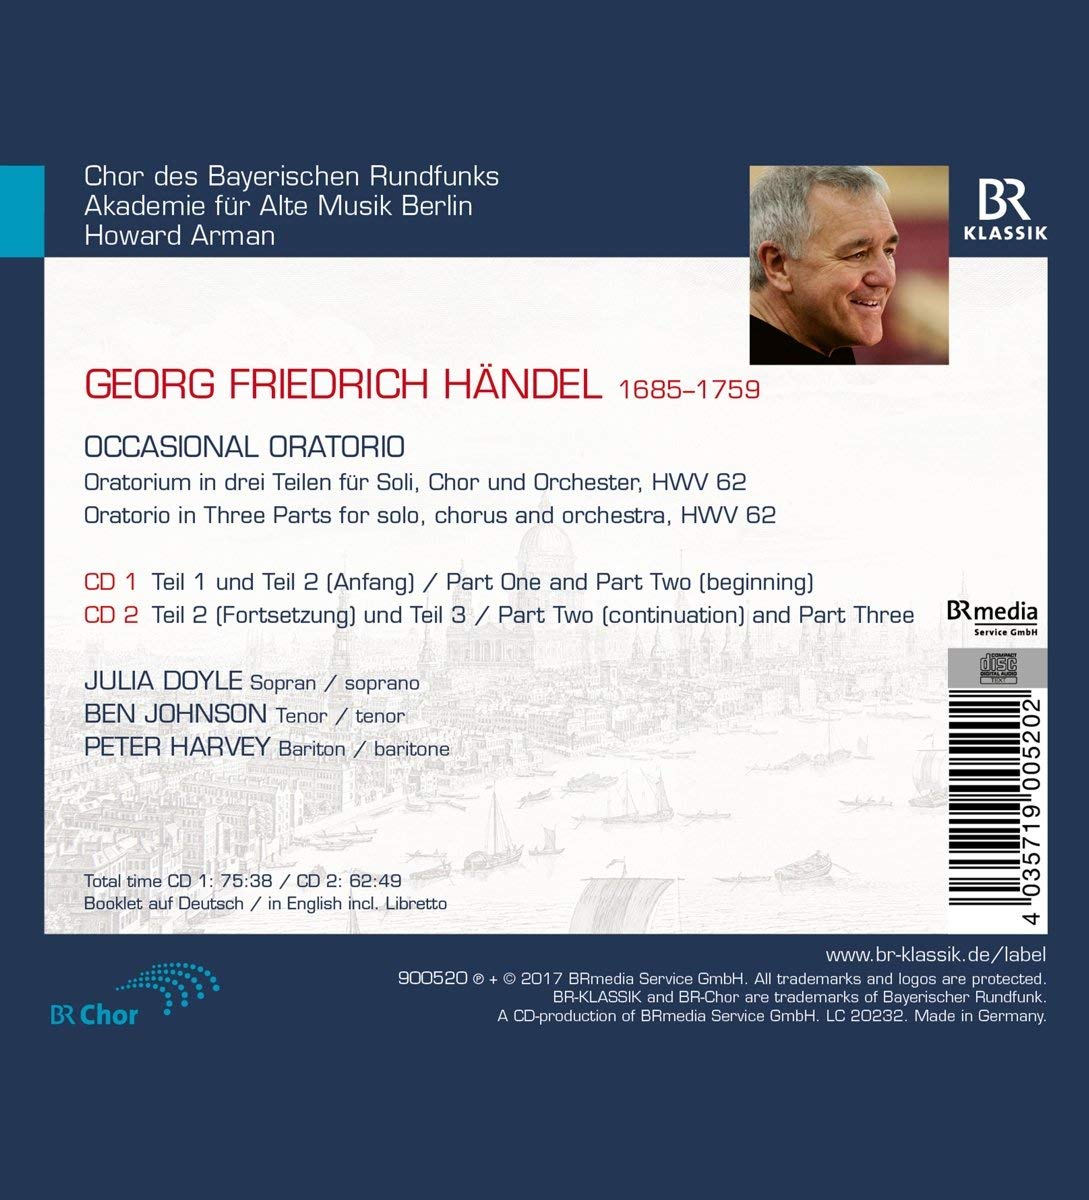 Handel: Occasional Oratorio - slide-1